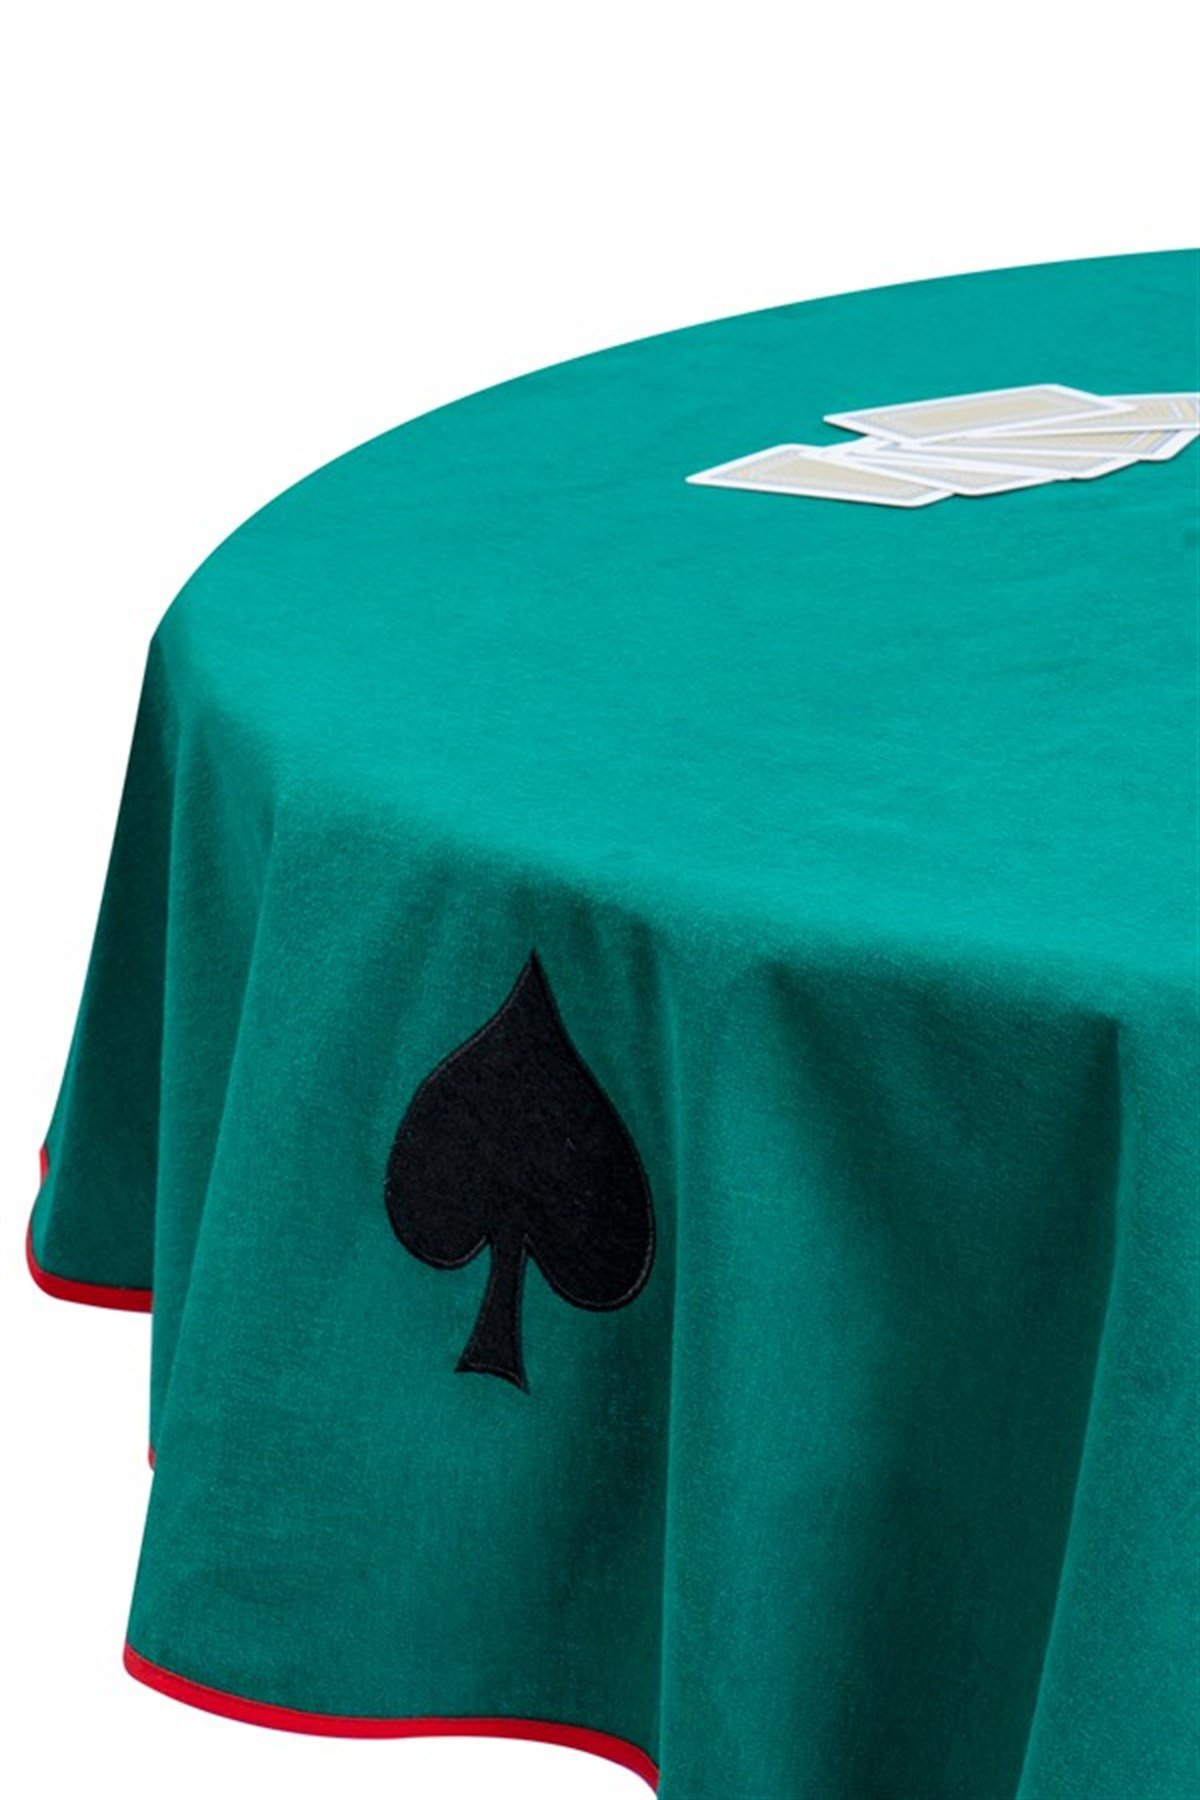 Oyun Masa Örtüsü (Okey, Poker, İskambil)